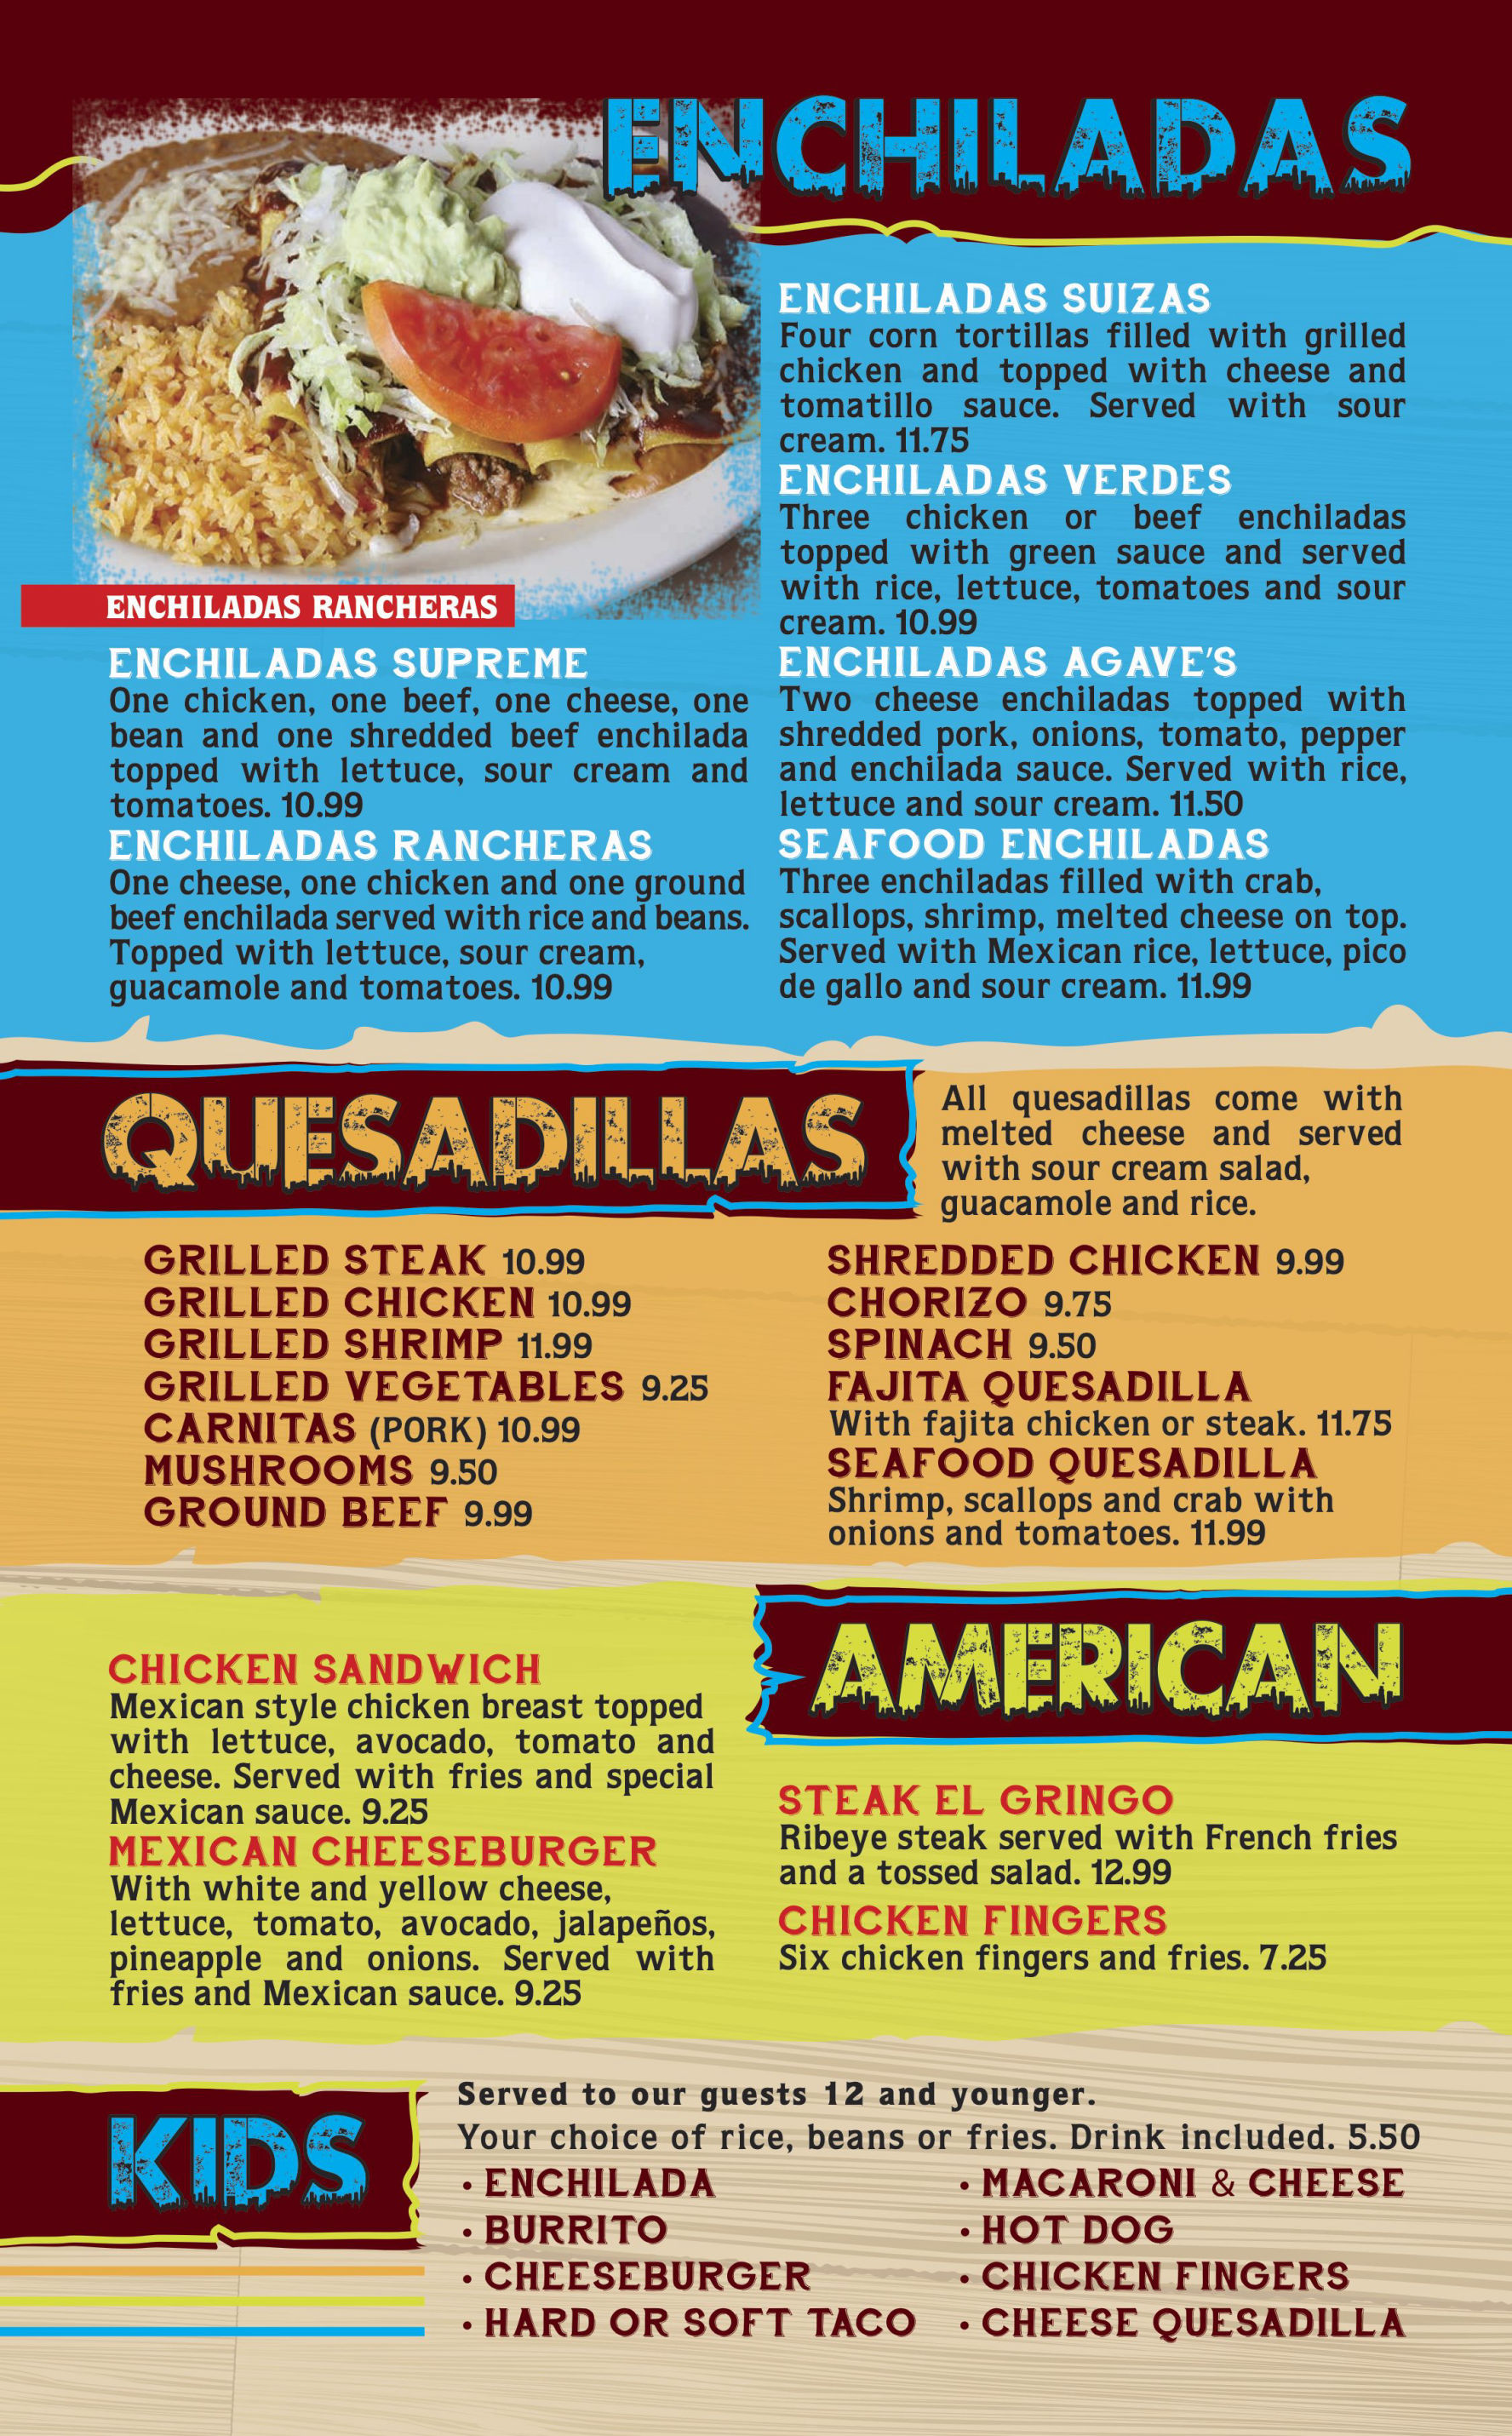 Enchiladas - Quesadillas - American - Kids